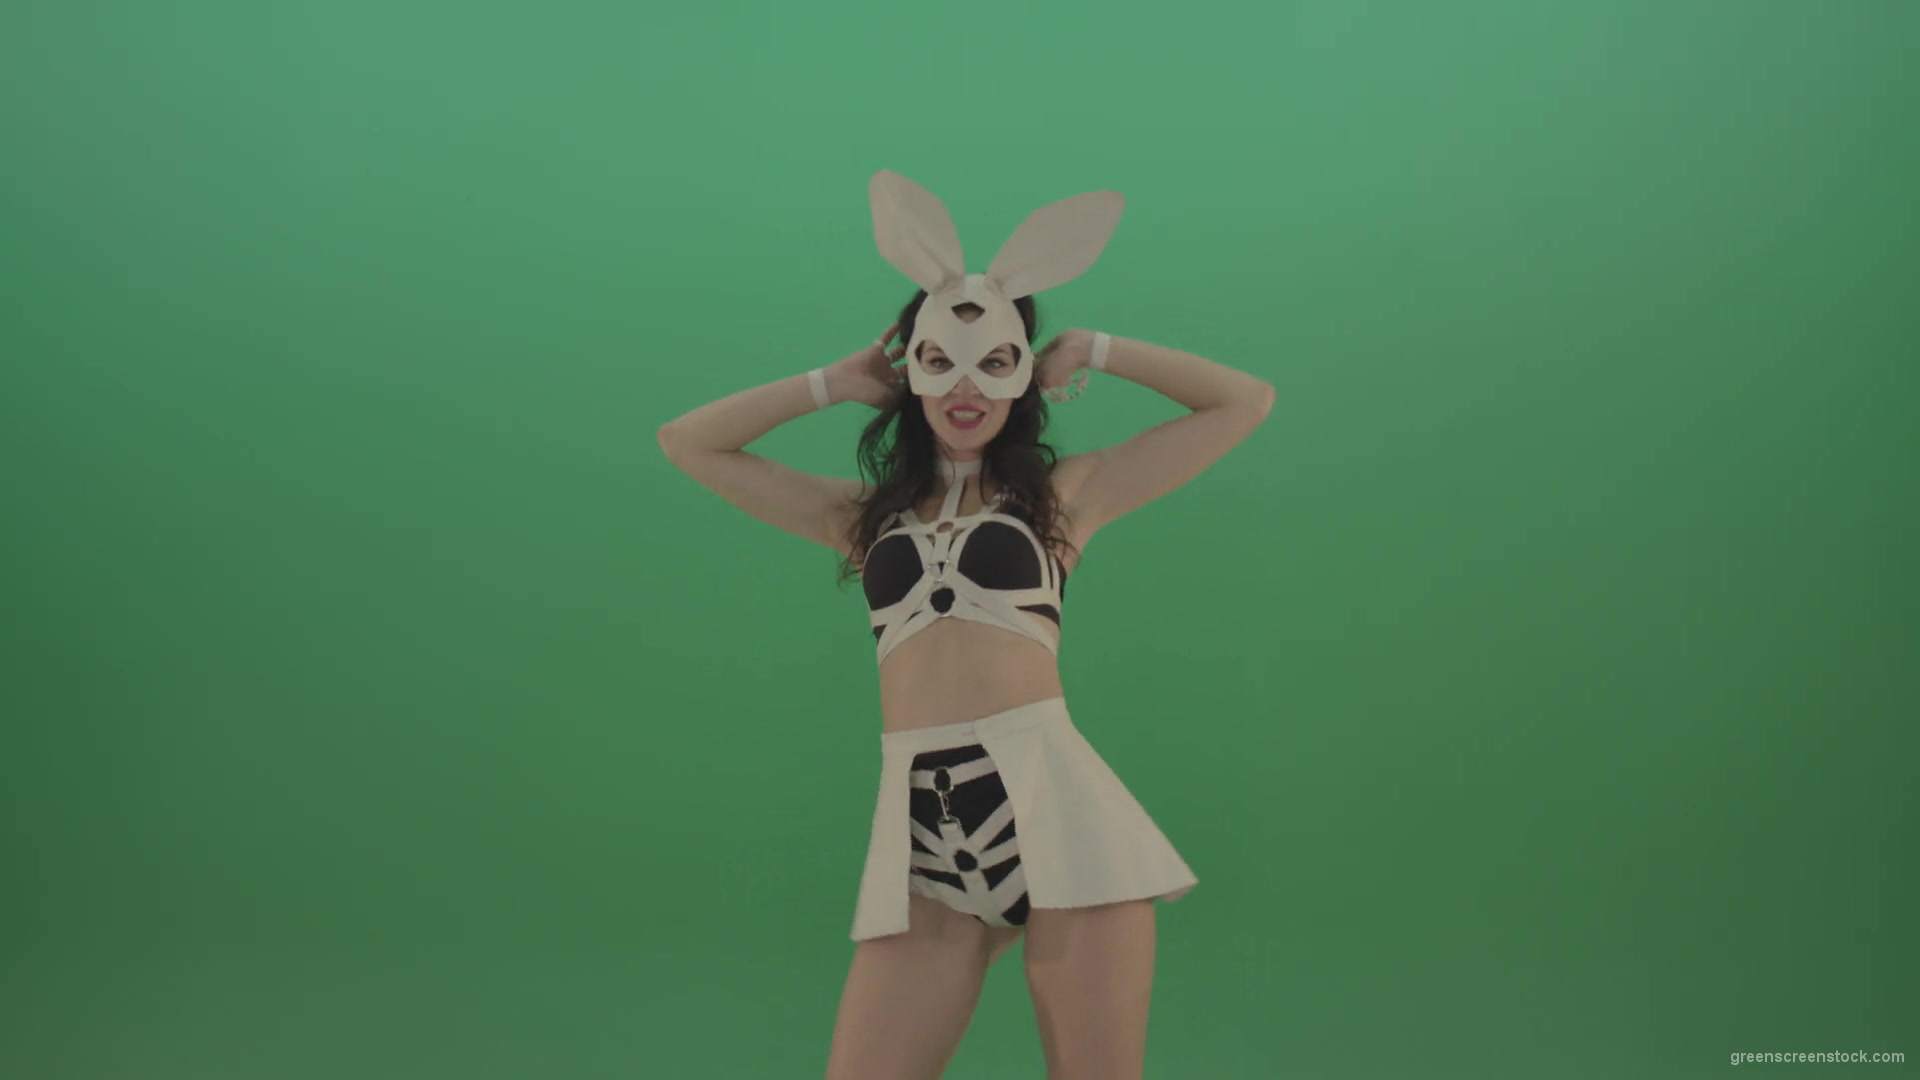 White-Rabbit-Girl-sexy-posing-dancing-in-bunny-style-over-Green-Screen-1920_005 Green Screen Stock